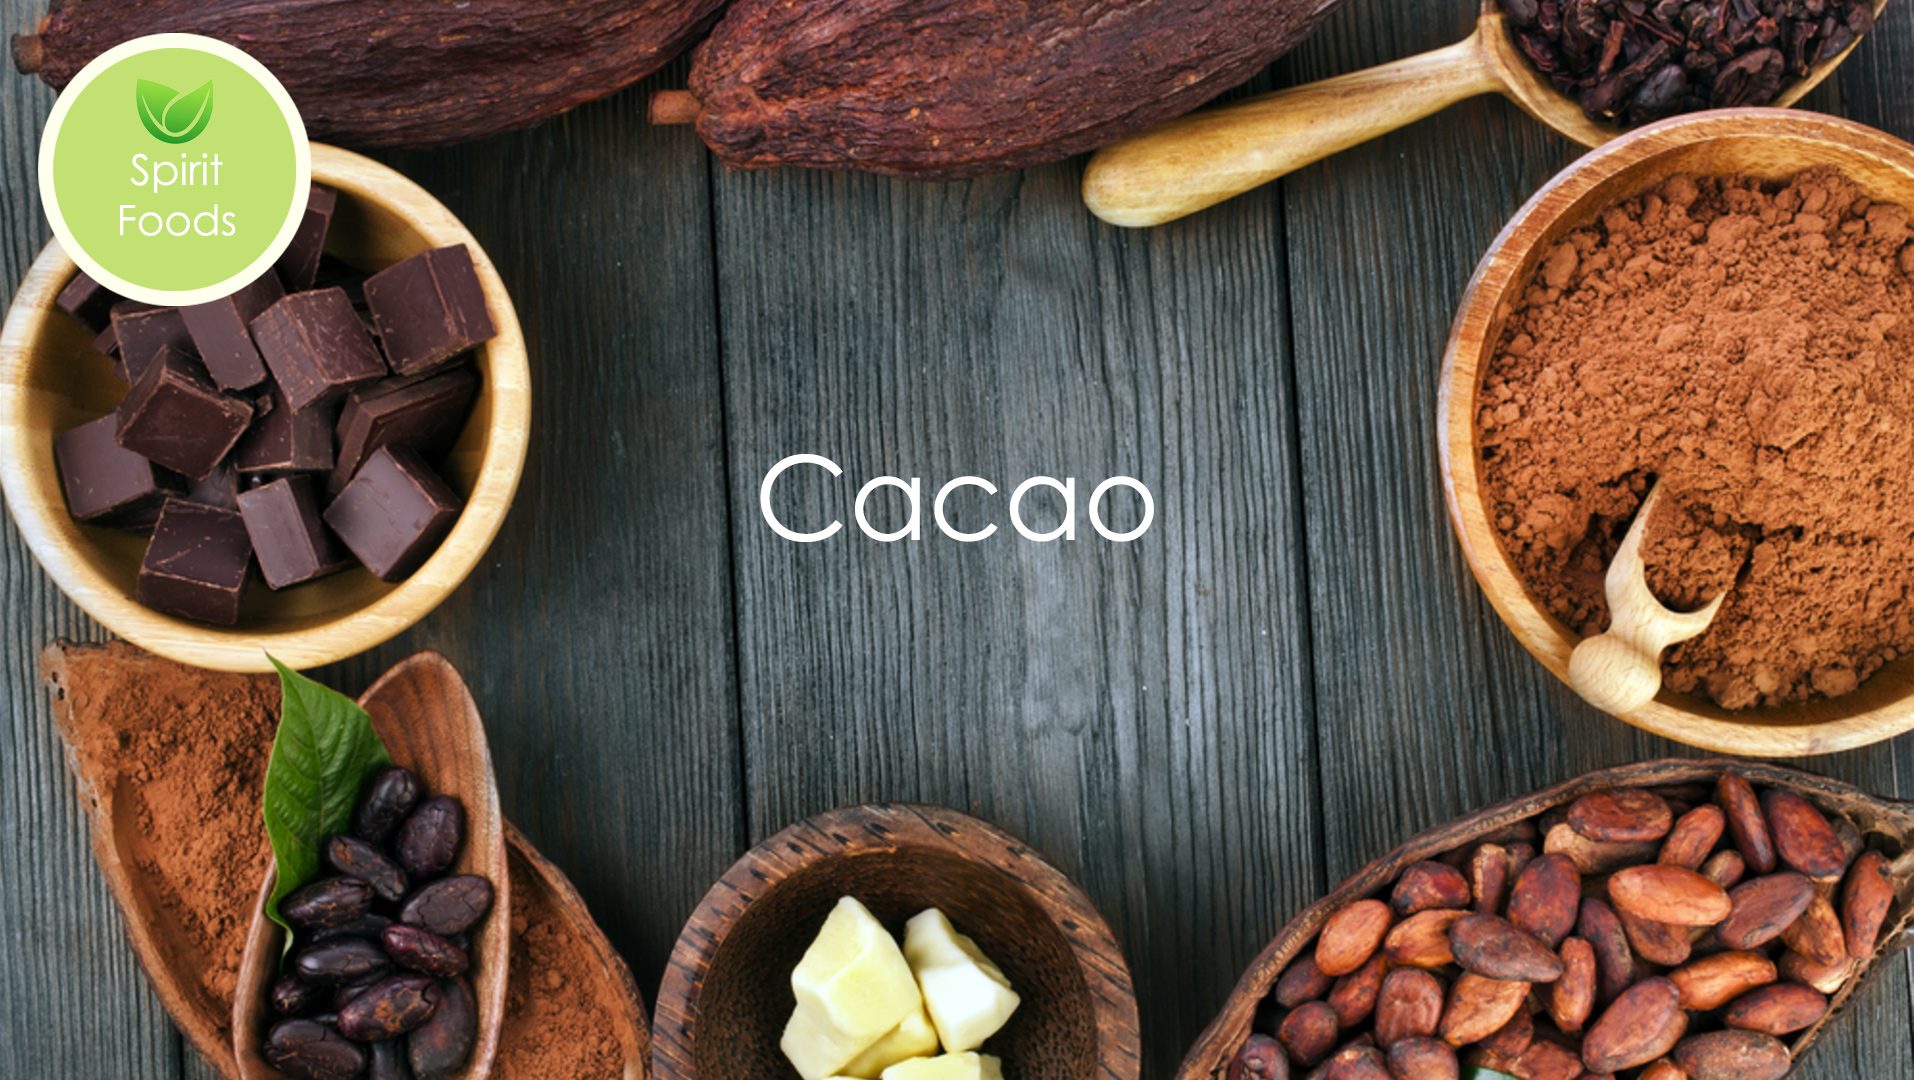 Spirit Food Cacao